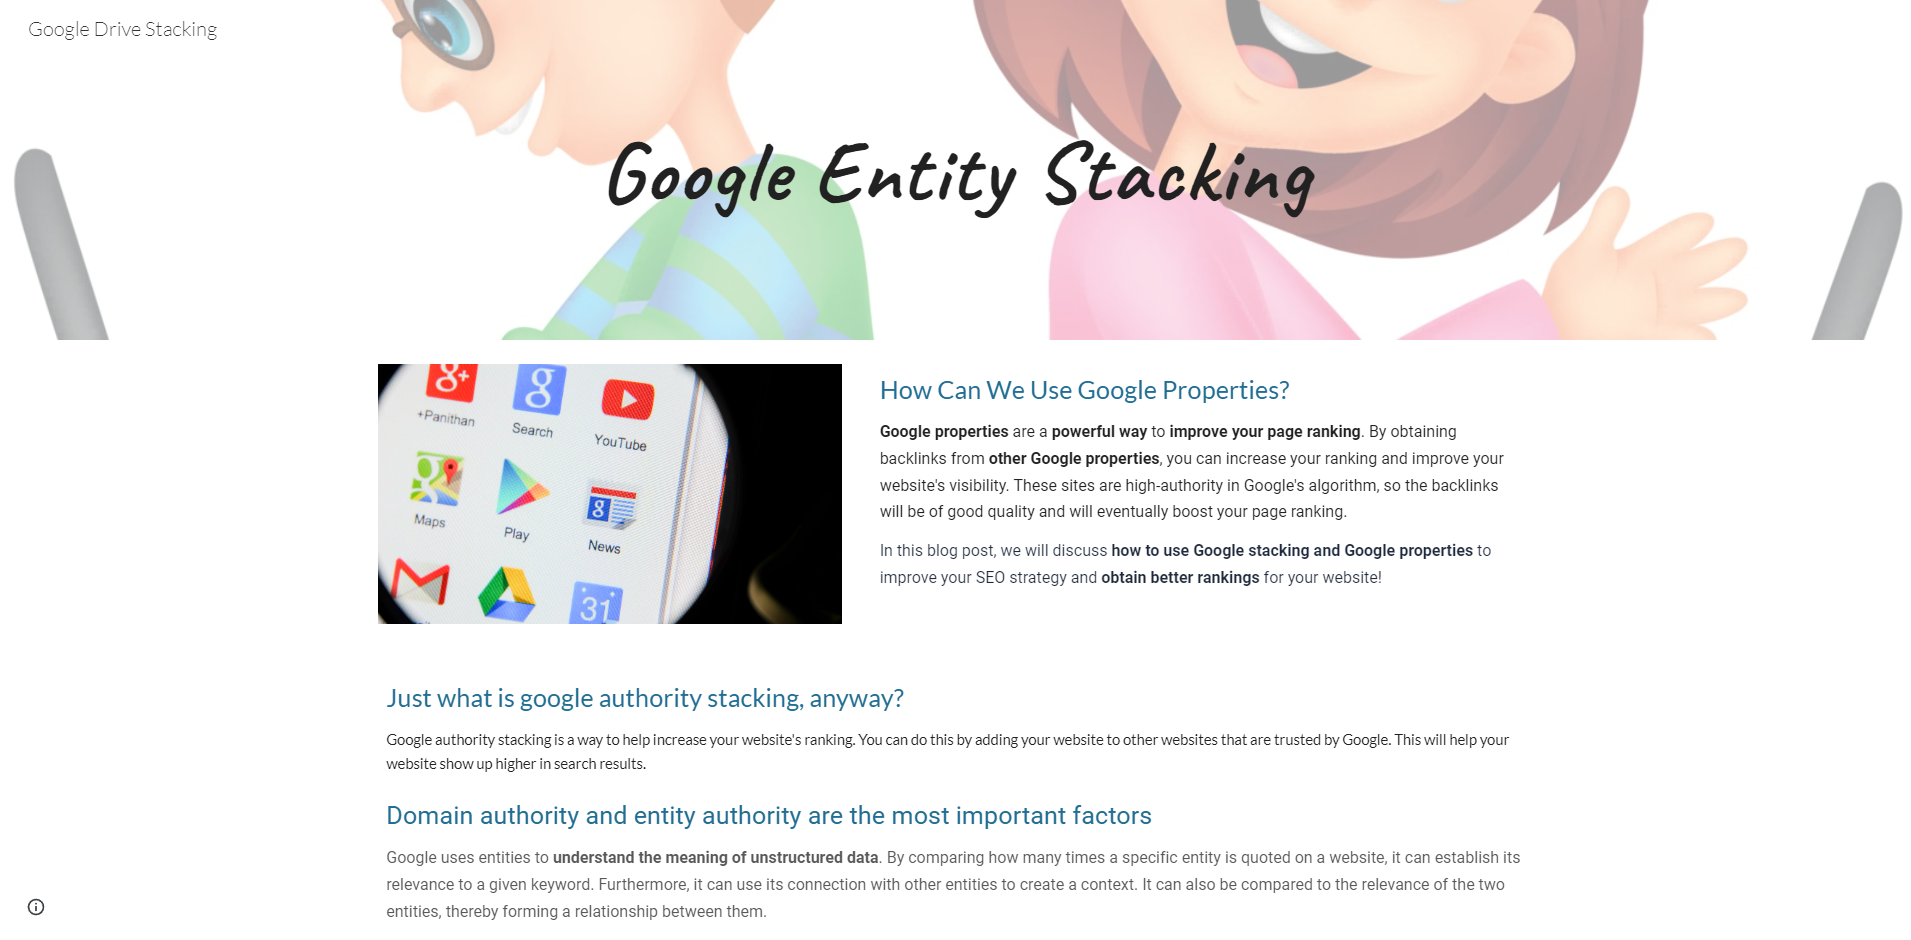 Google Authority Stack